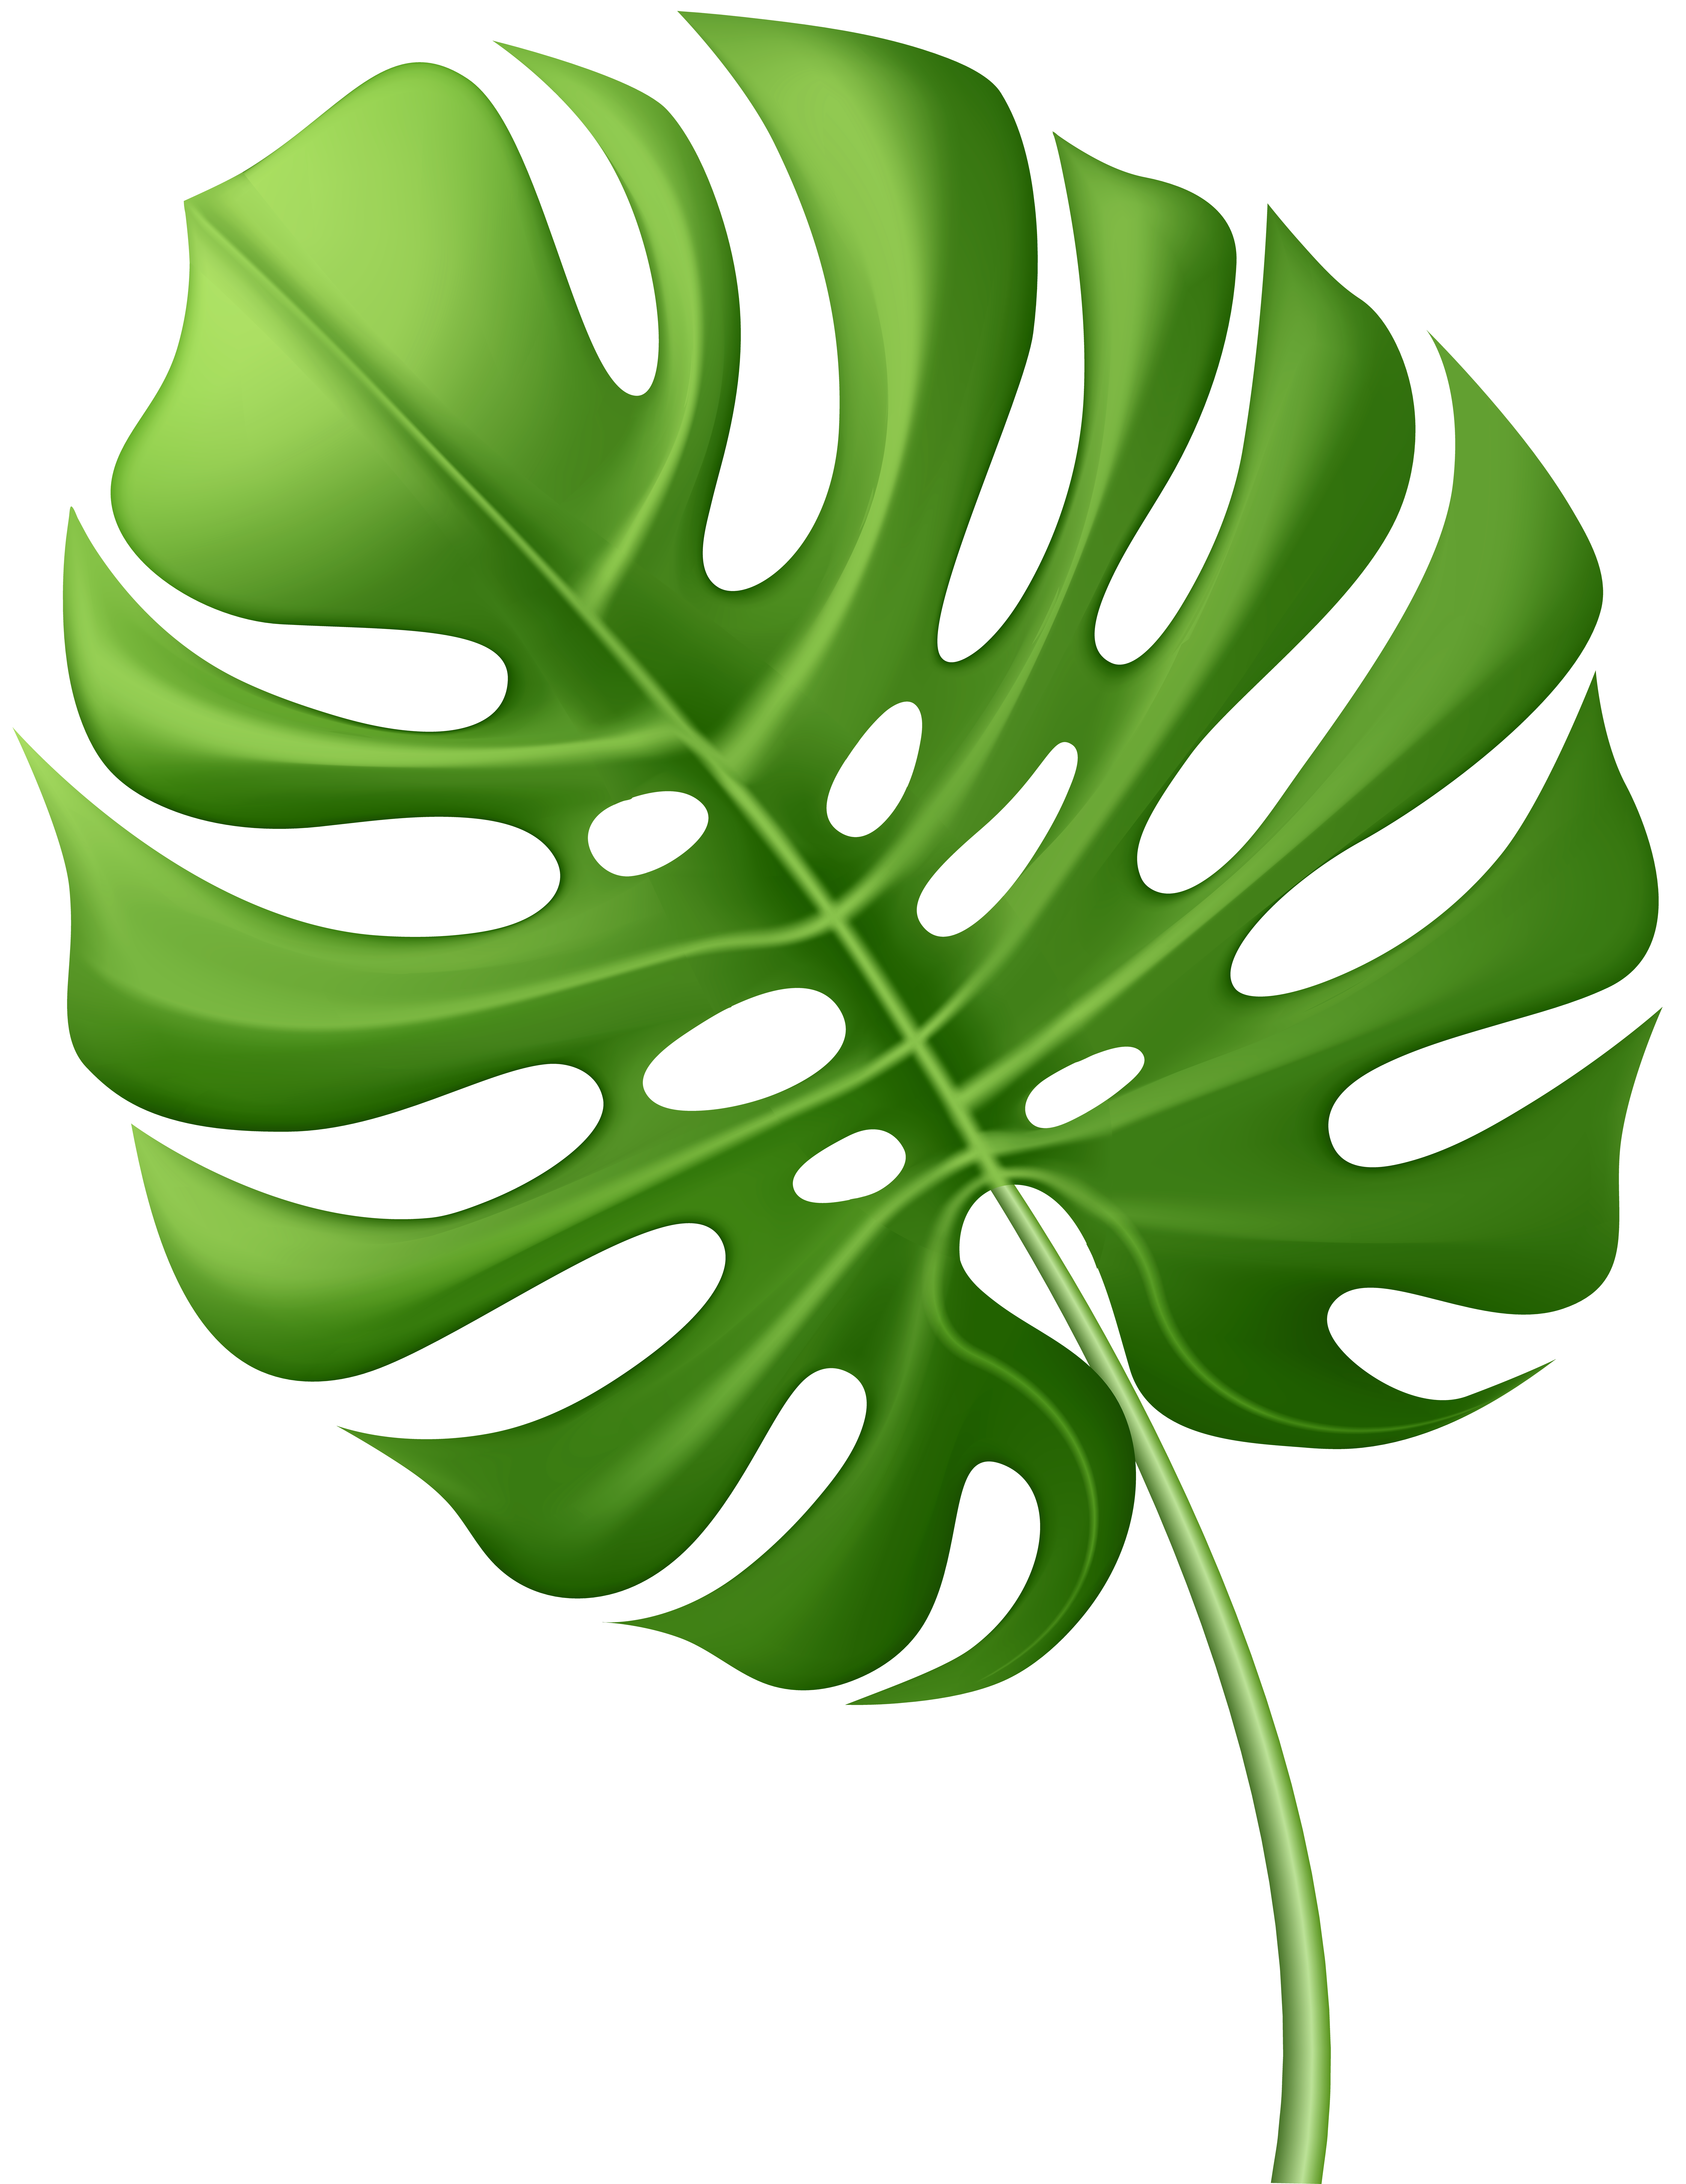 Large tropical leaf.